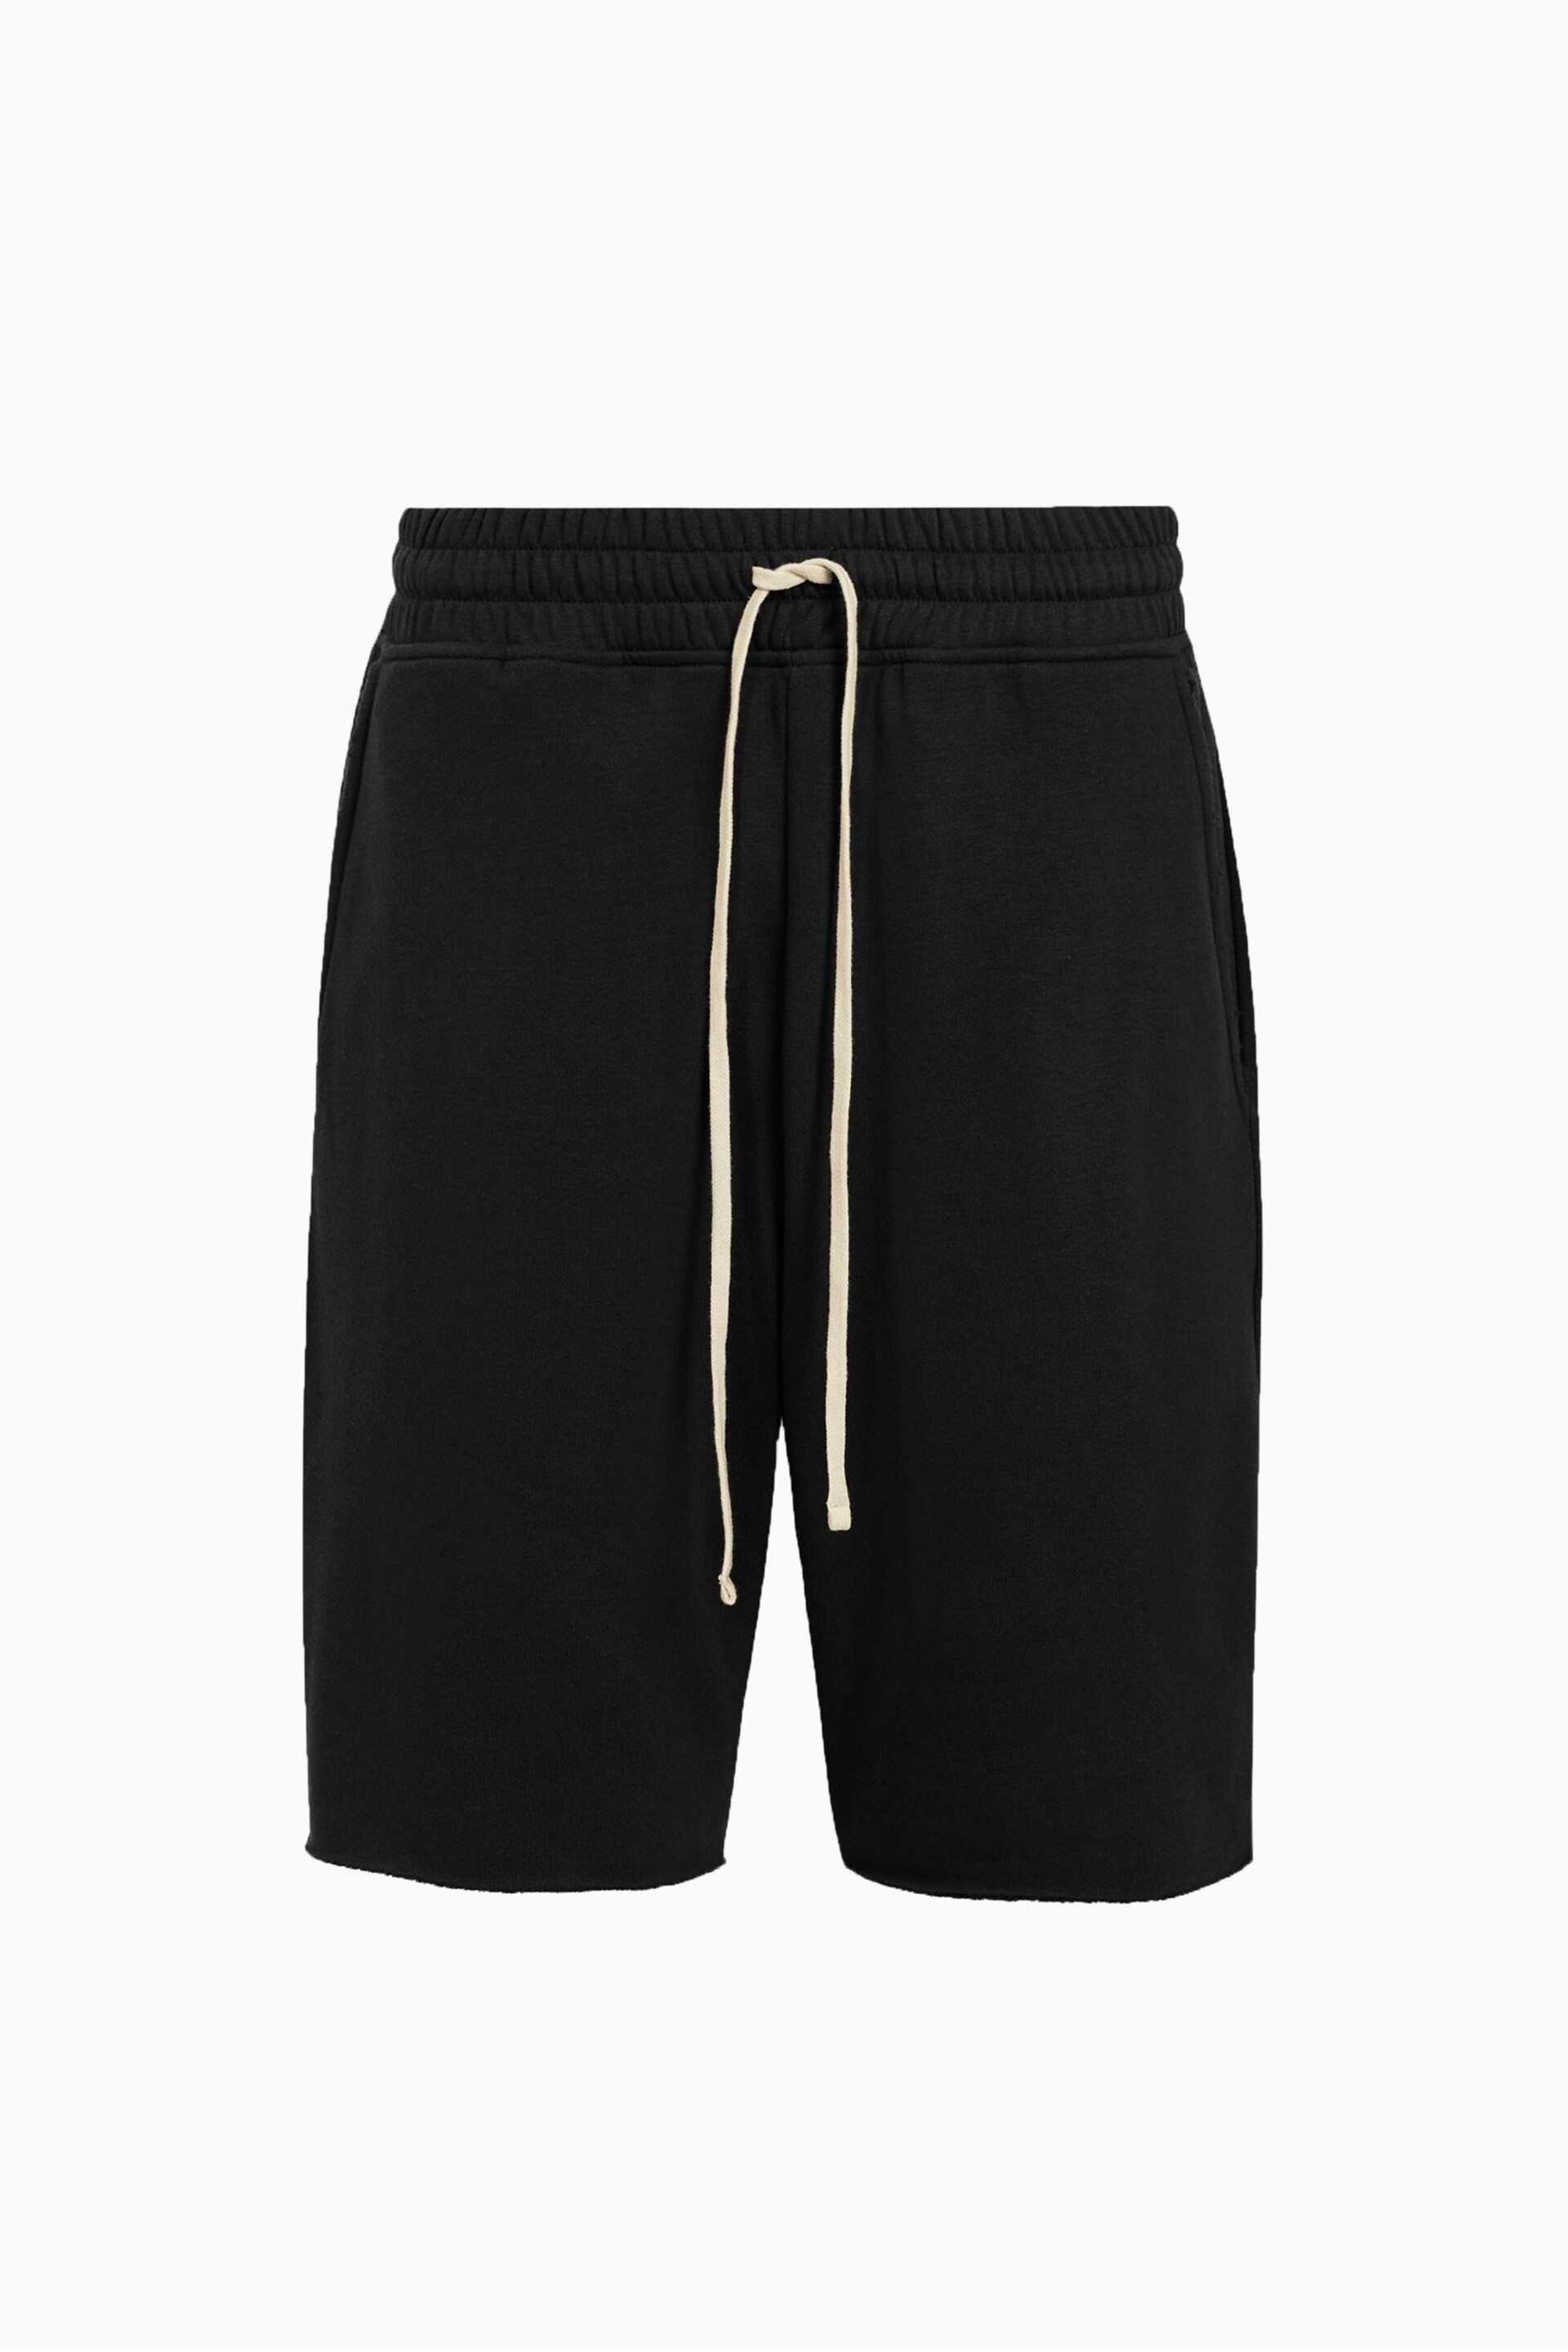 AllSaints Black Helix Shorts - Image 3 of 7